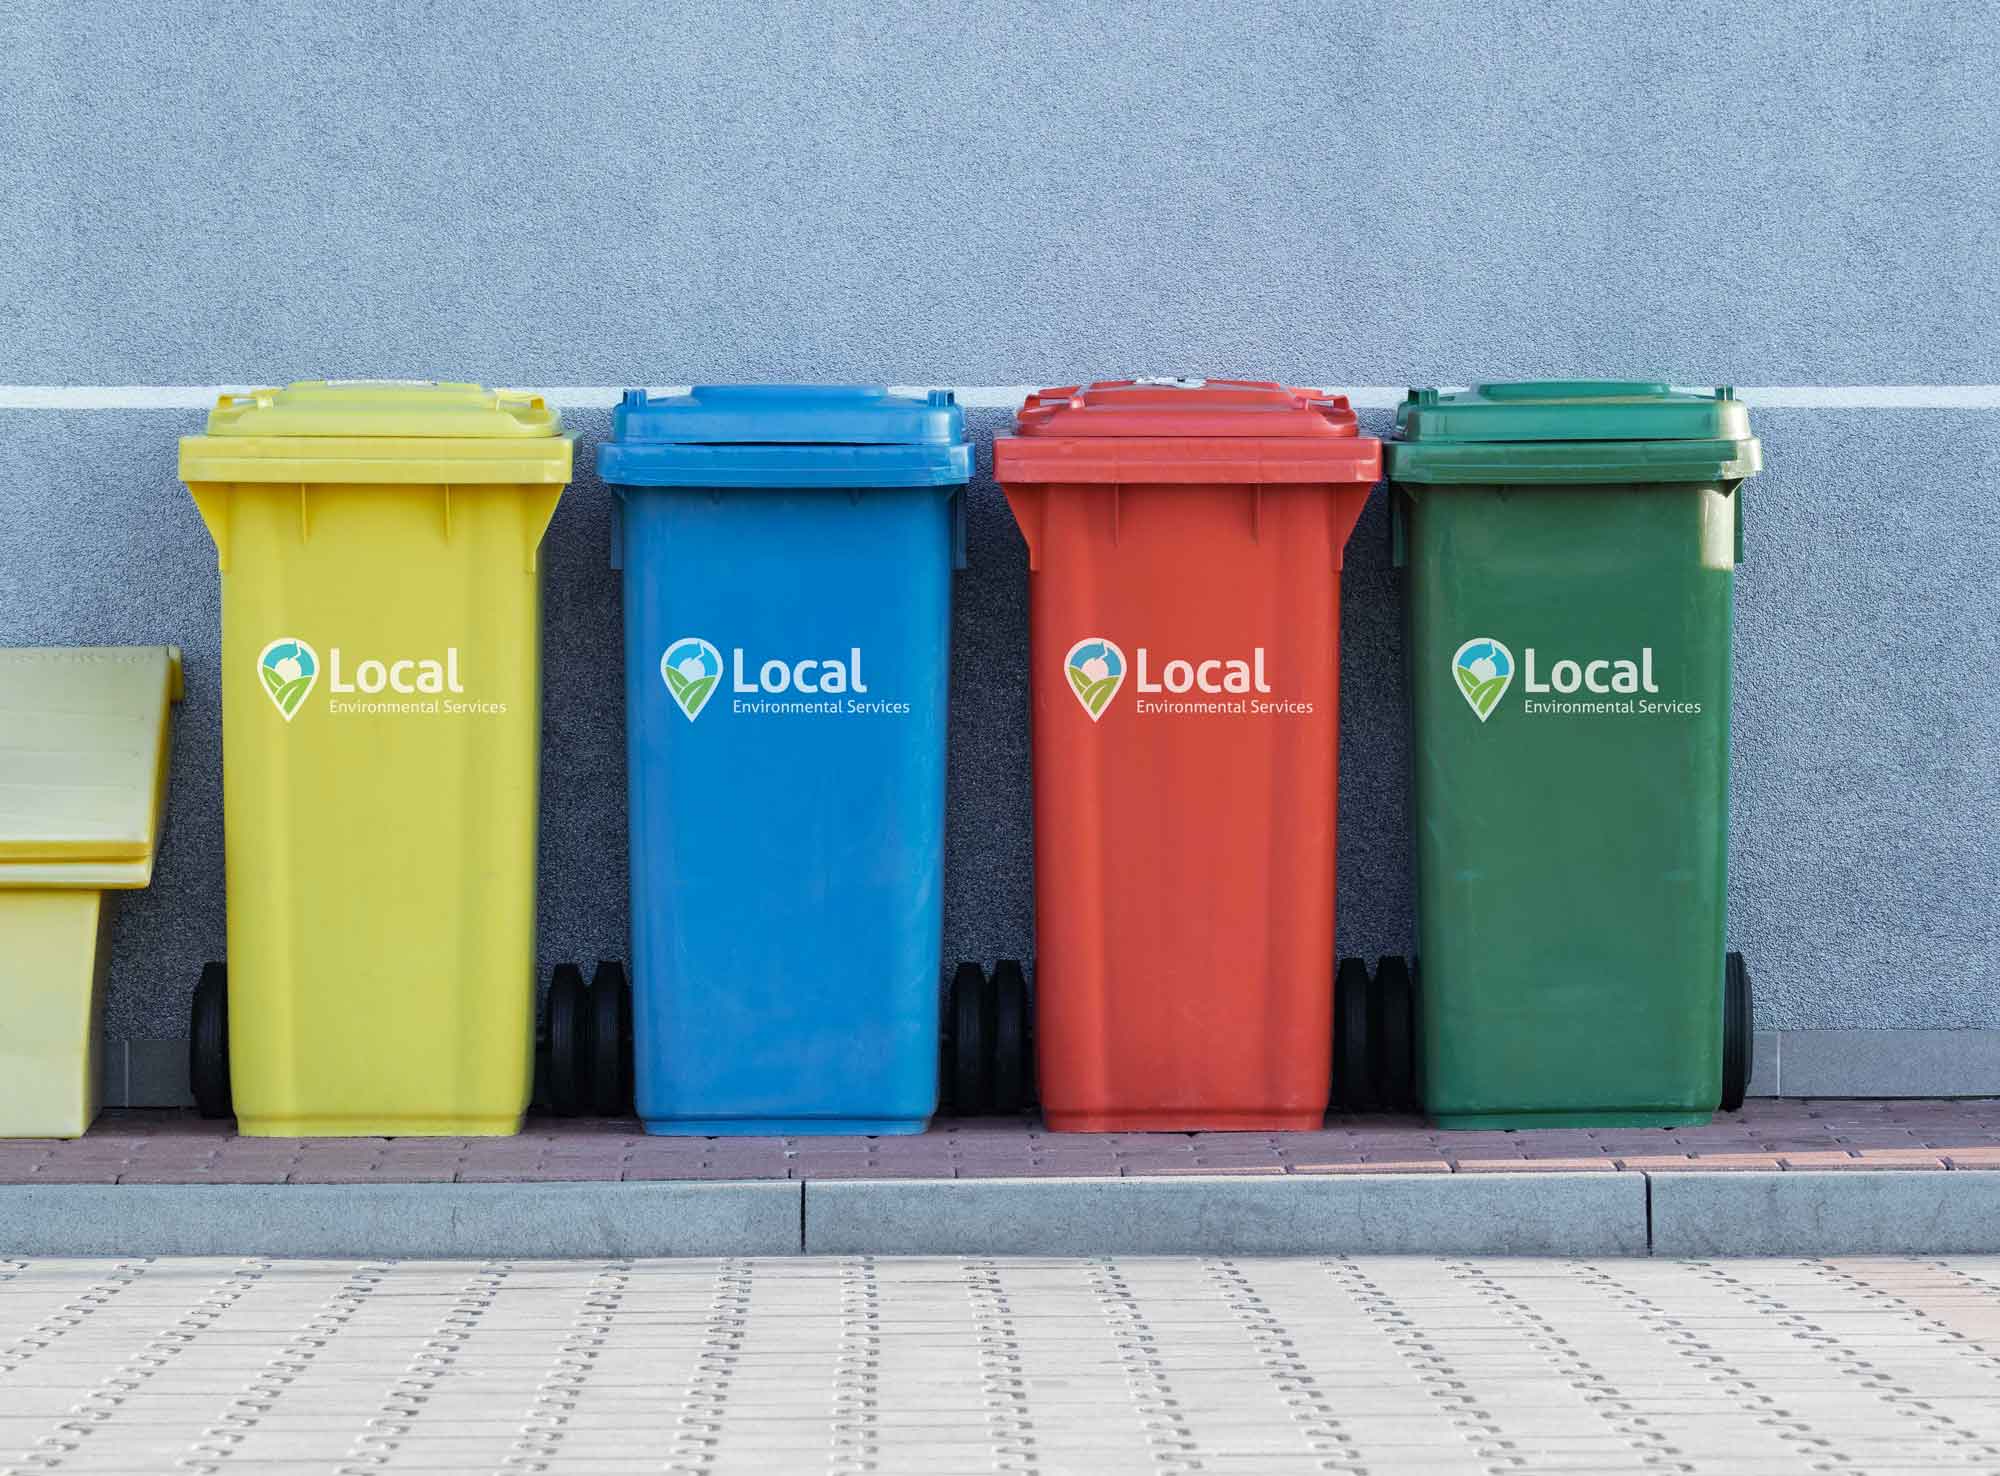 4 residential garbage bins lined up